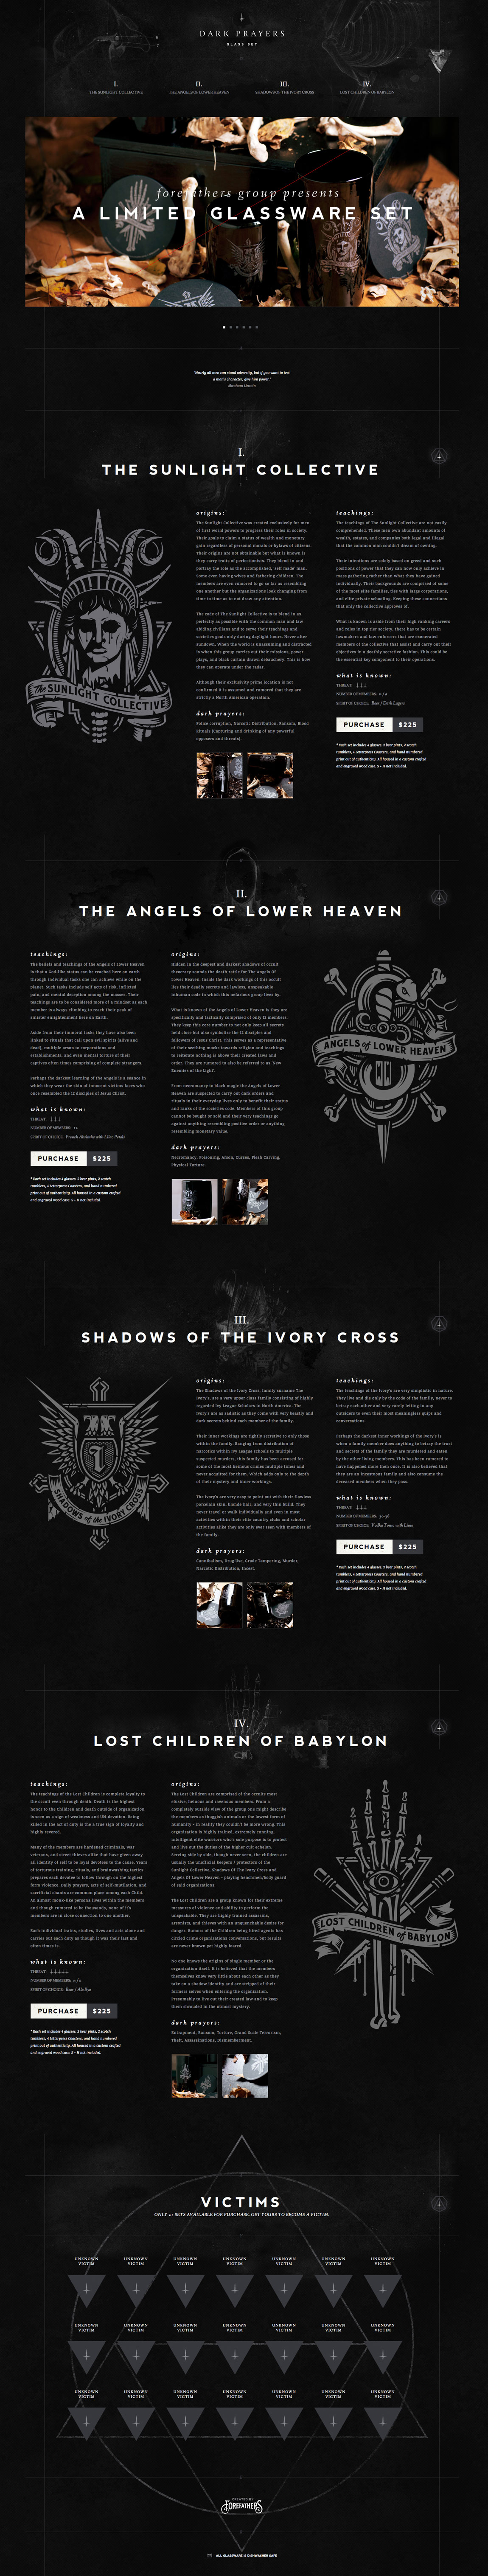 Dark Prayers Website Screenshot